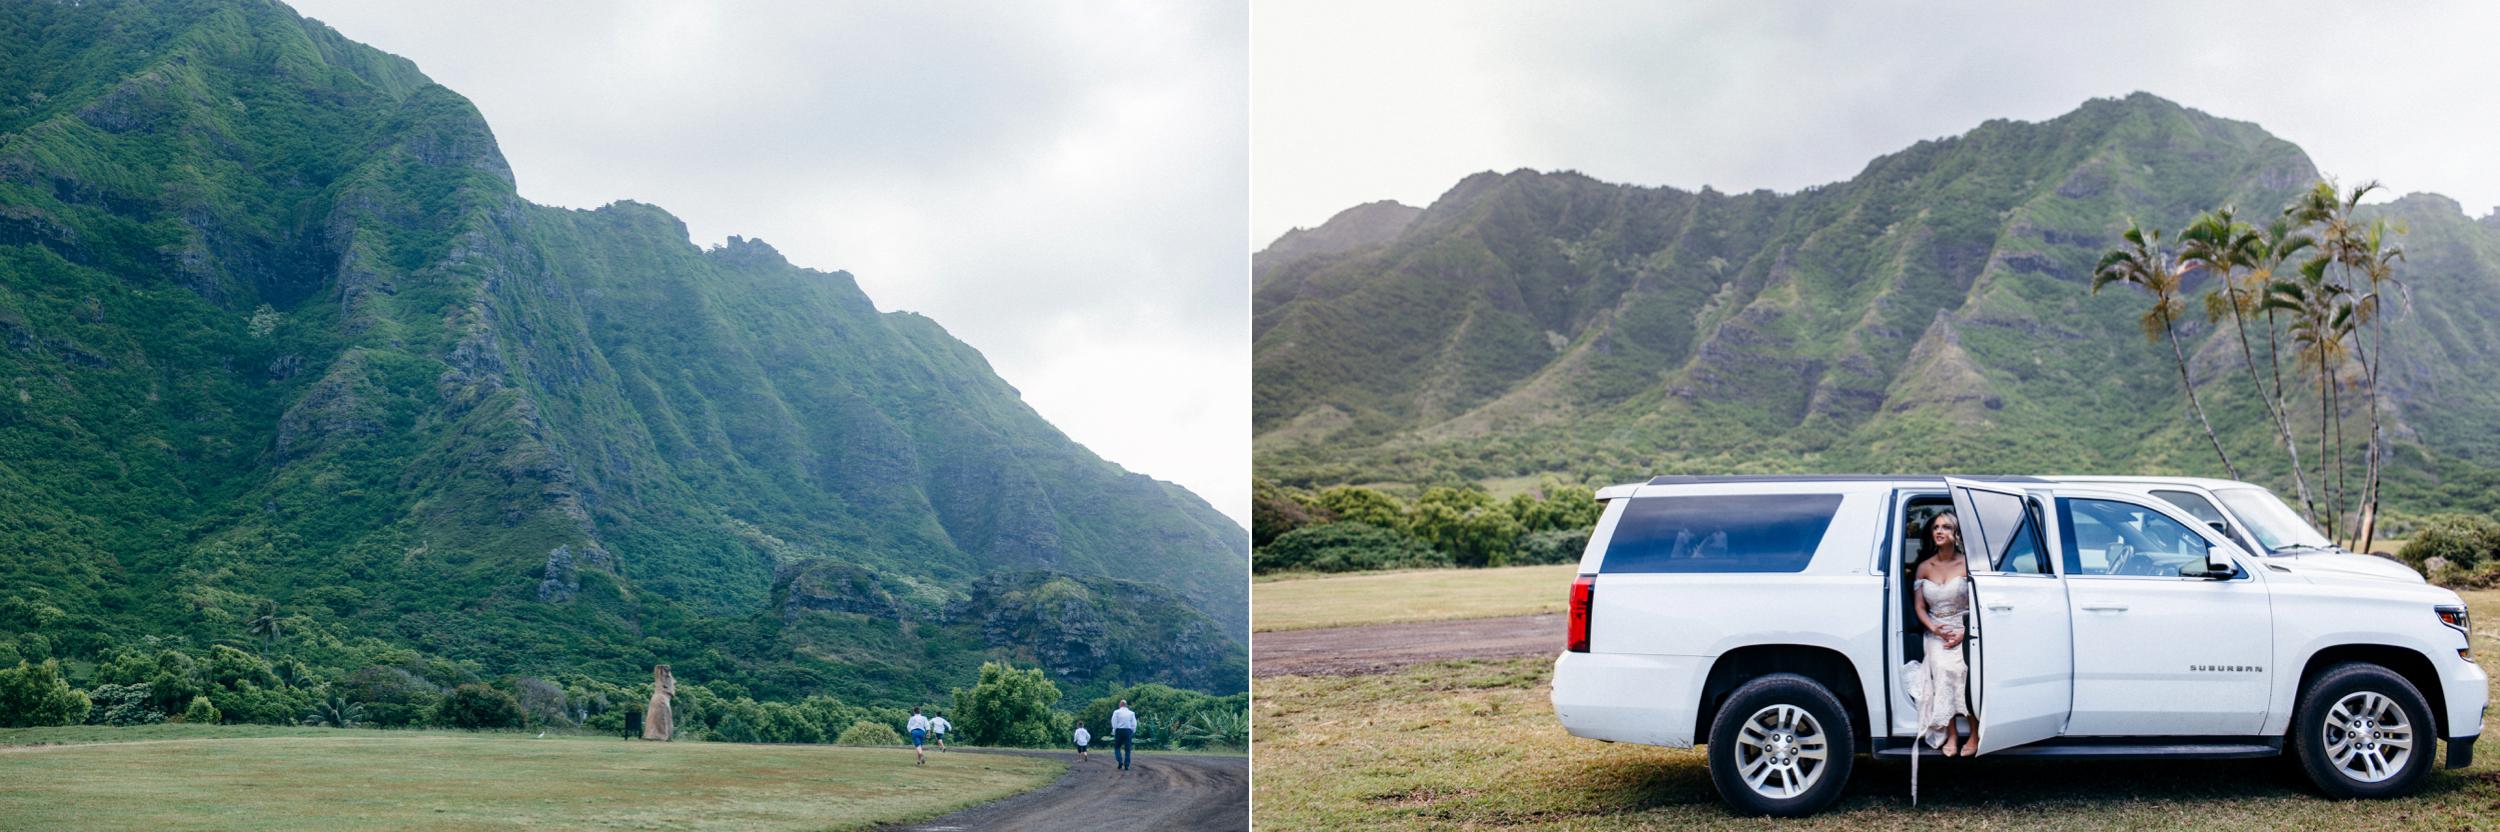  Kualoa Ranch, Jurassic Park Valley Elopement - Hawaii Wedding Photography 